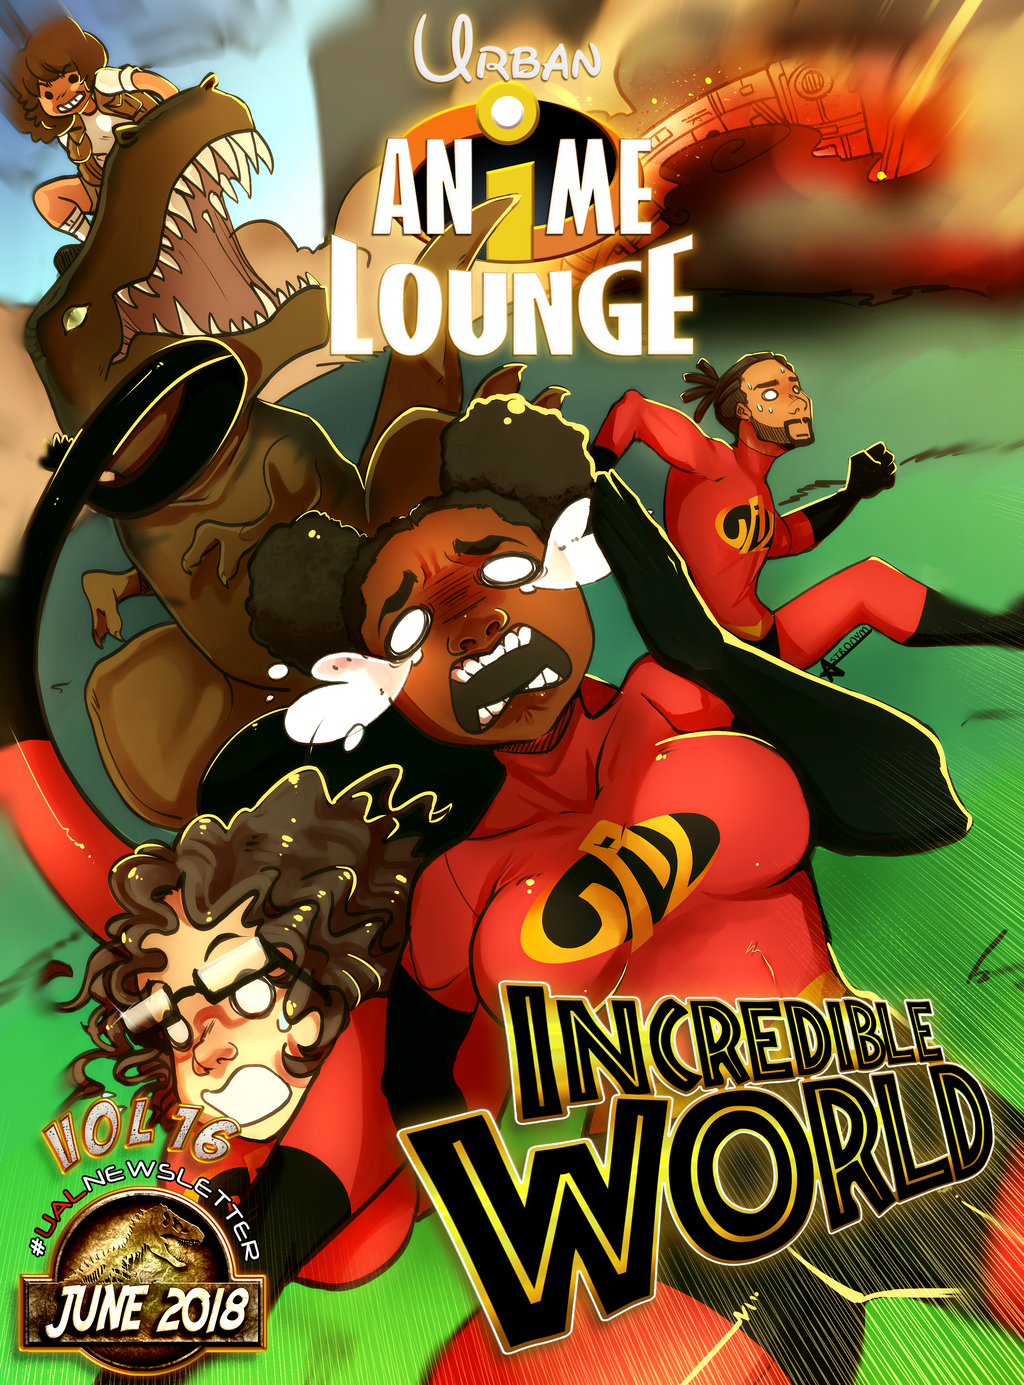 Urban Anime Lounge: Newsletter Volume 16 - Incredible World